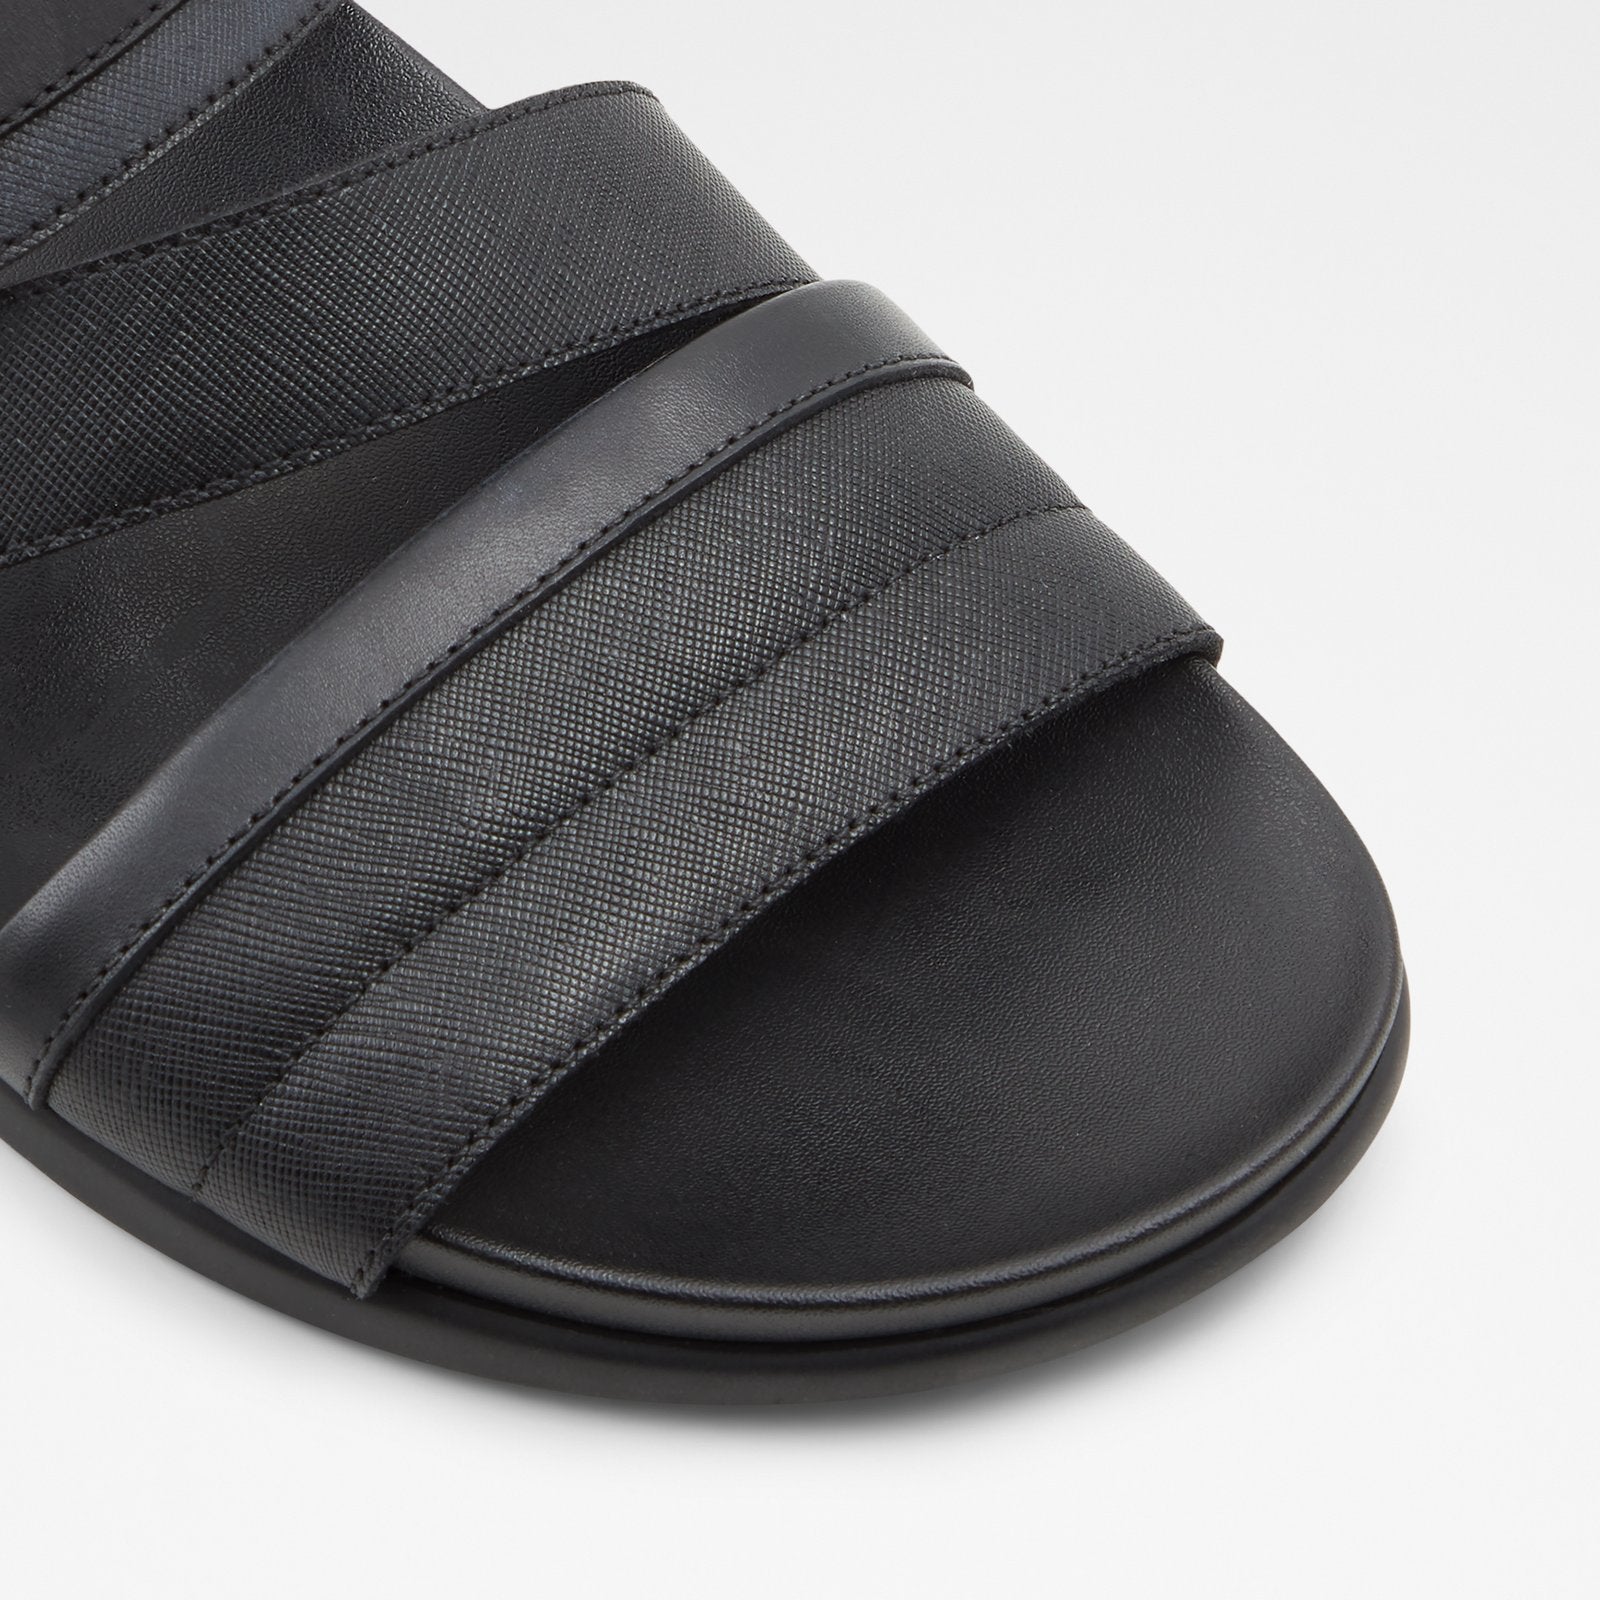 Mirerasien Men Shoes - Black - ALDO KSA